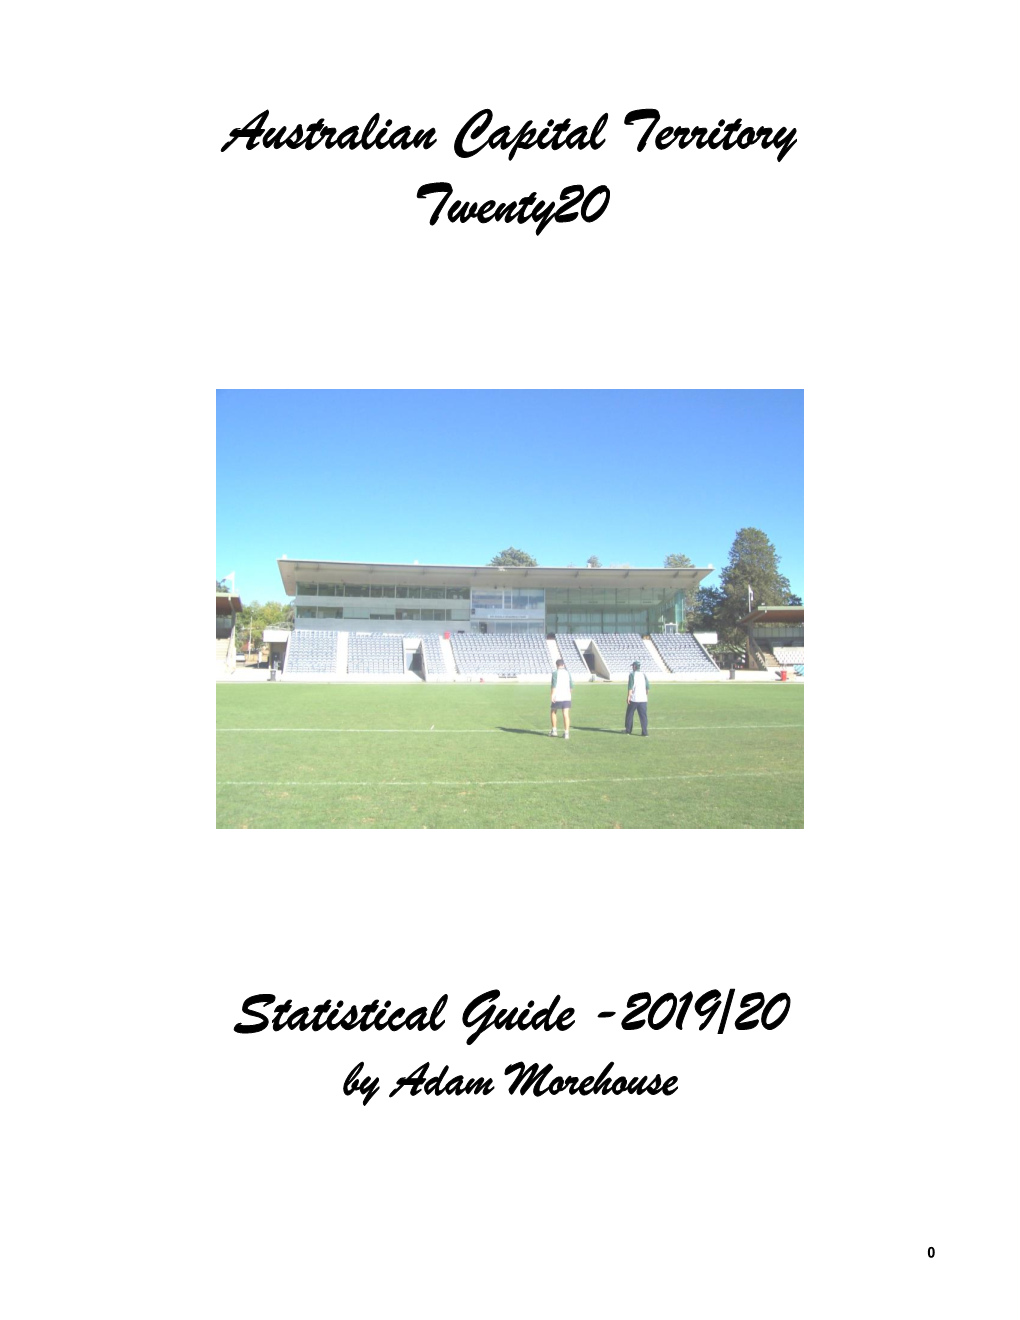 Australian Capital Territory Twenty20 Statistical Guide -2019/20